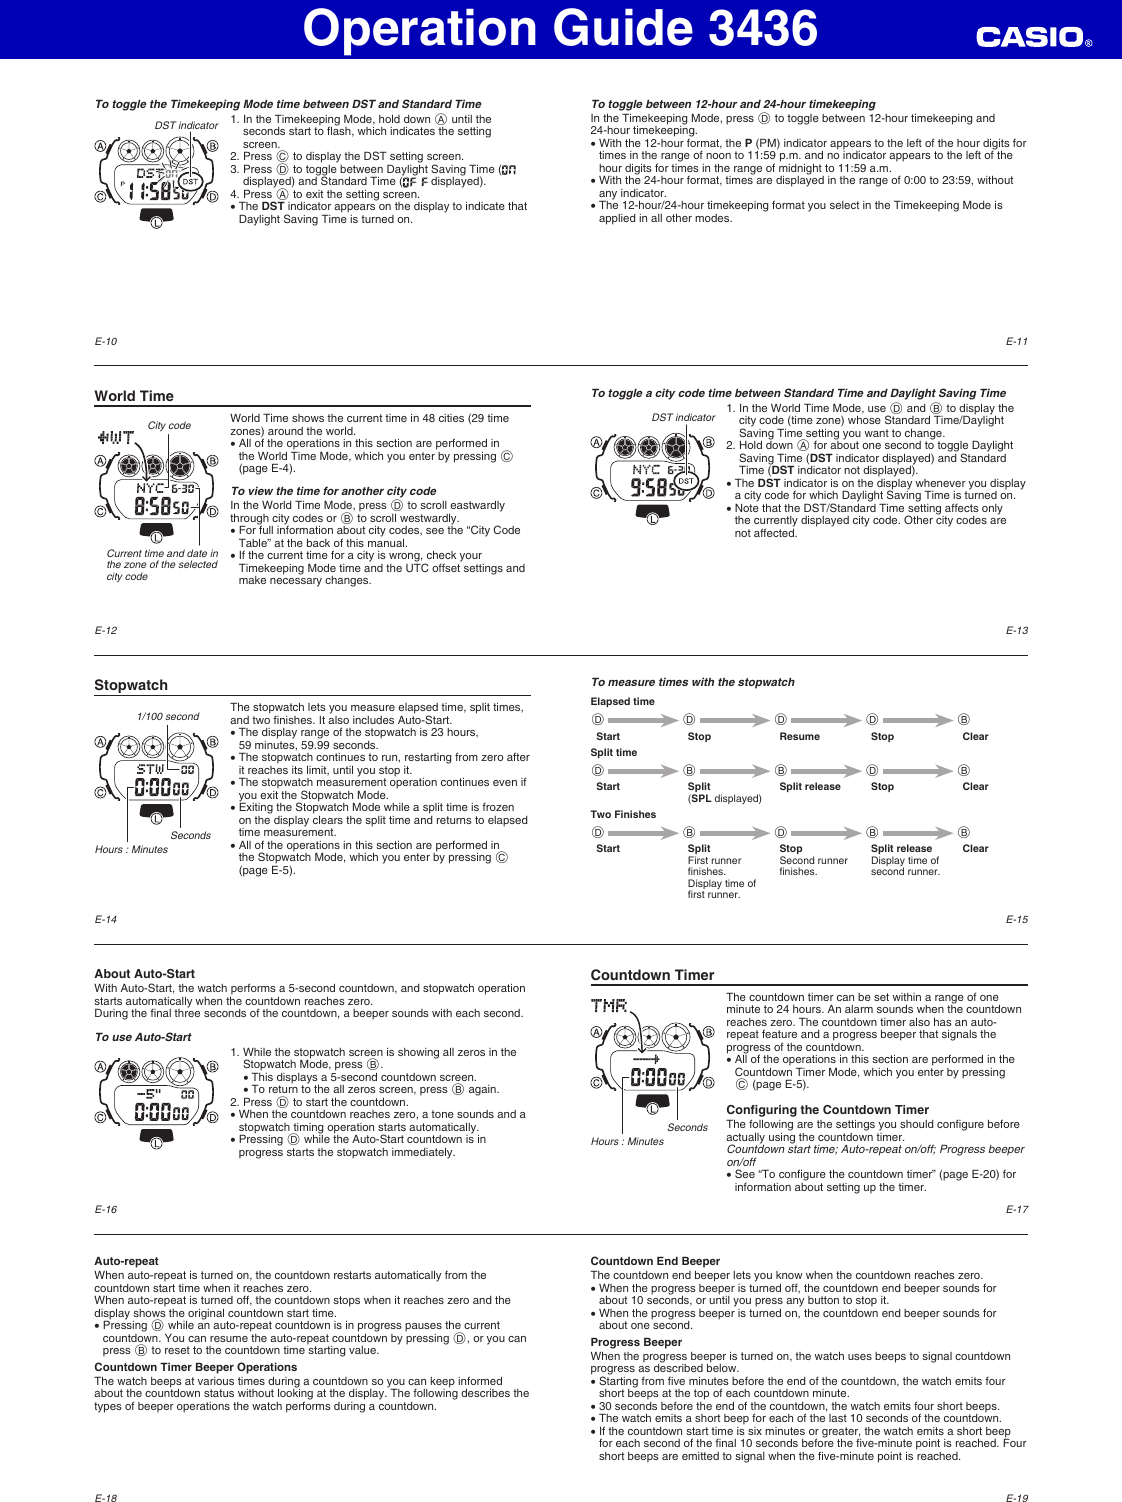 Page 2 of 5 - Casio MA1405-EA QW-3436 User Manual  To The Bd1bb088-964e-46fb-afb3-ad01ccfcbfc5